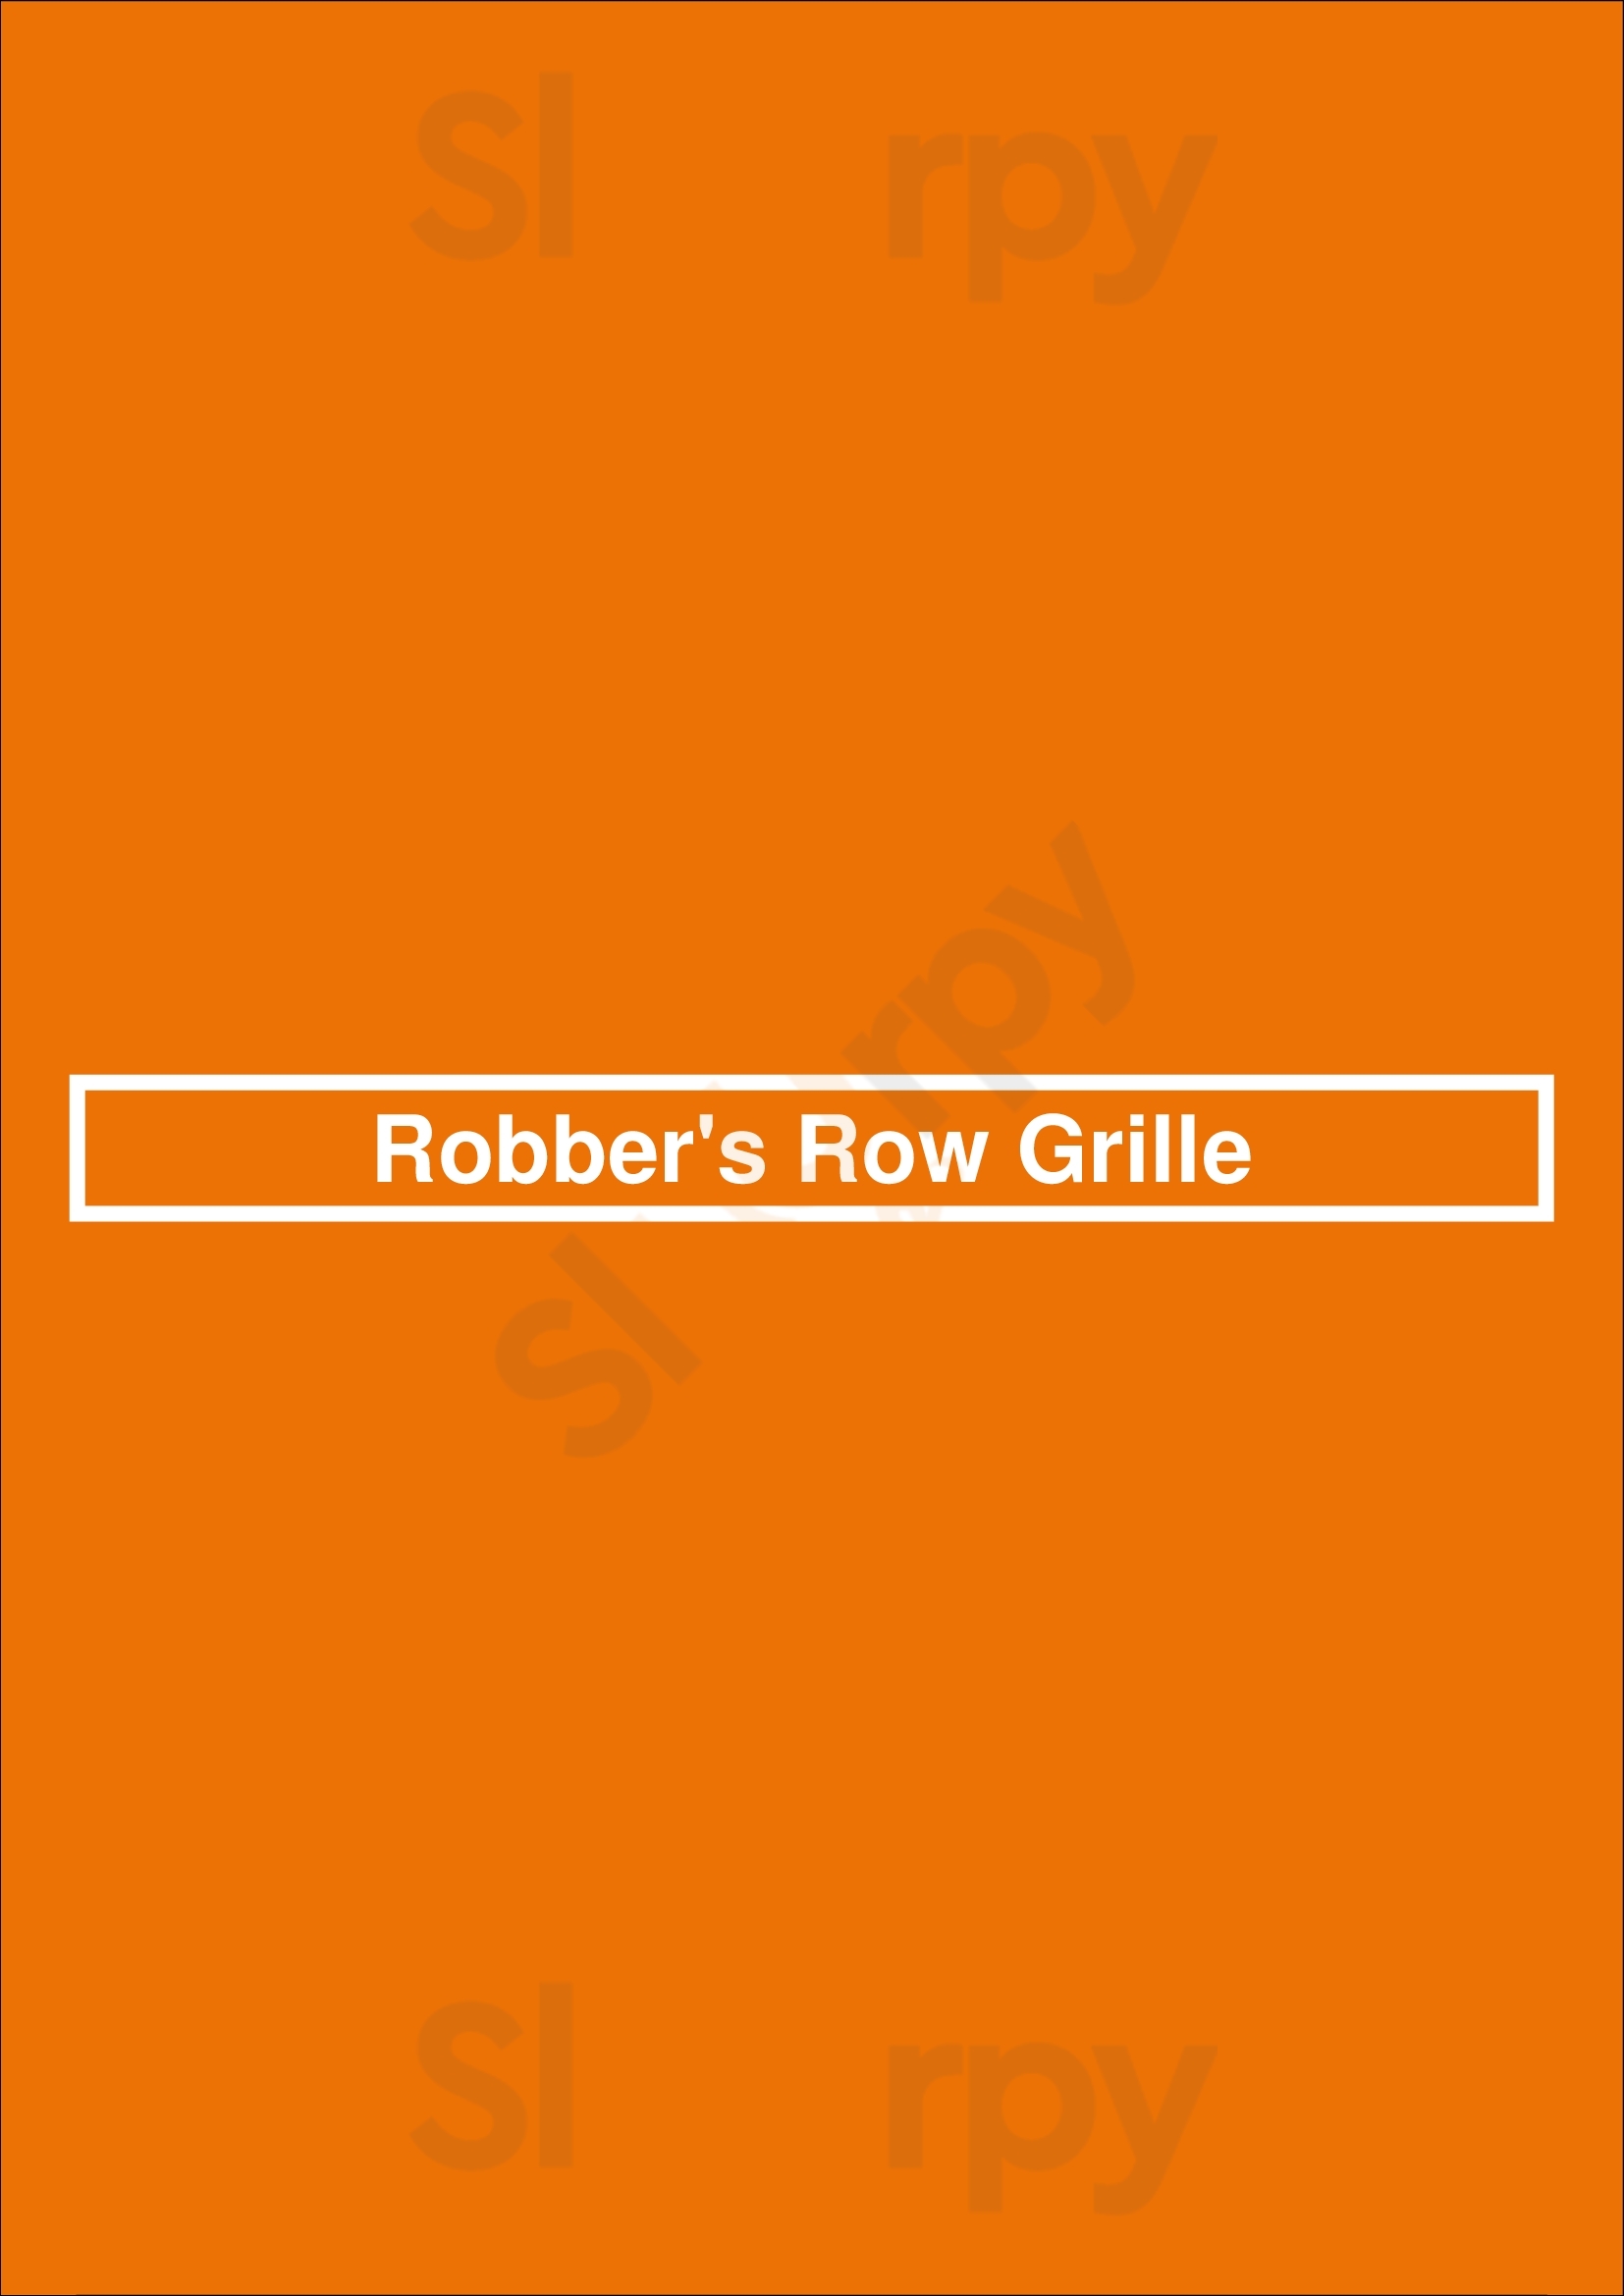 Robber's Row Grille Hilton Head Menu - 1